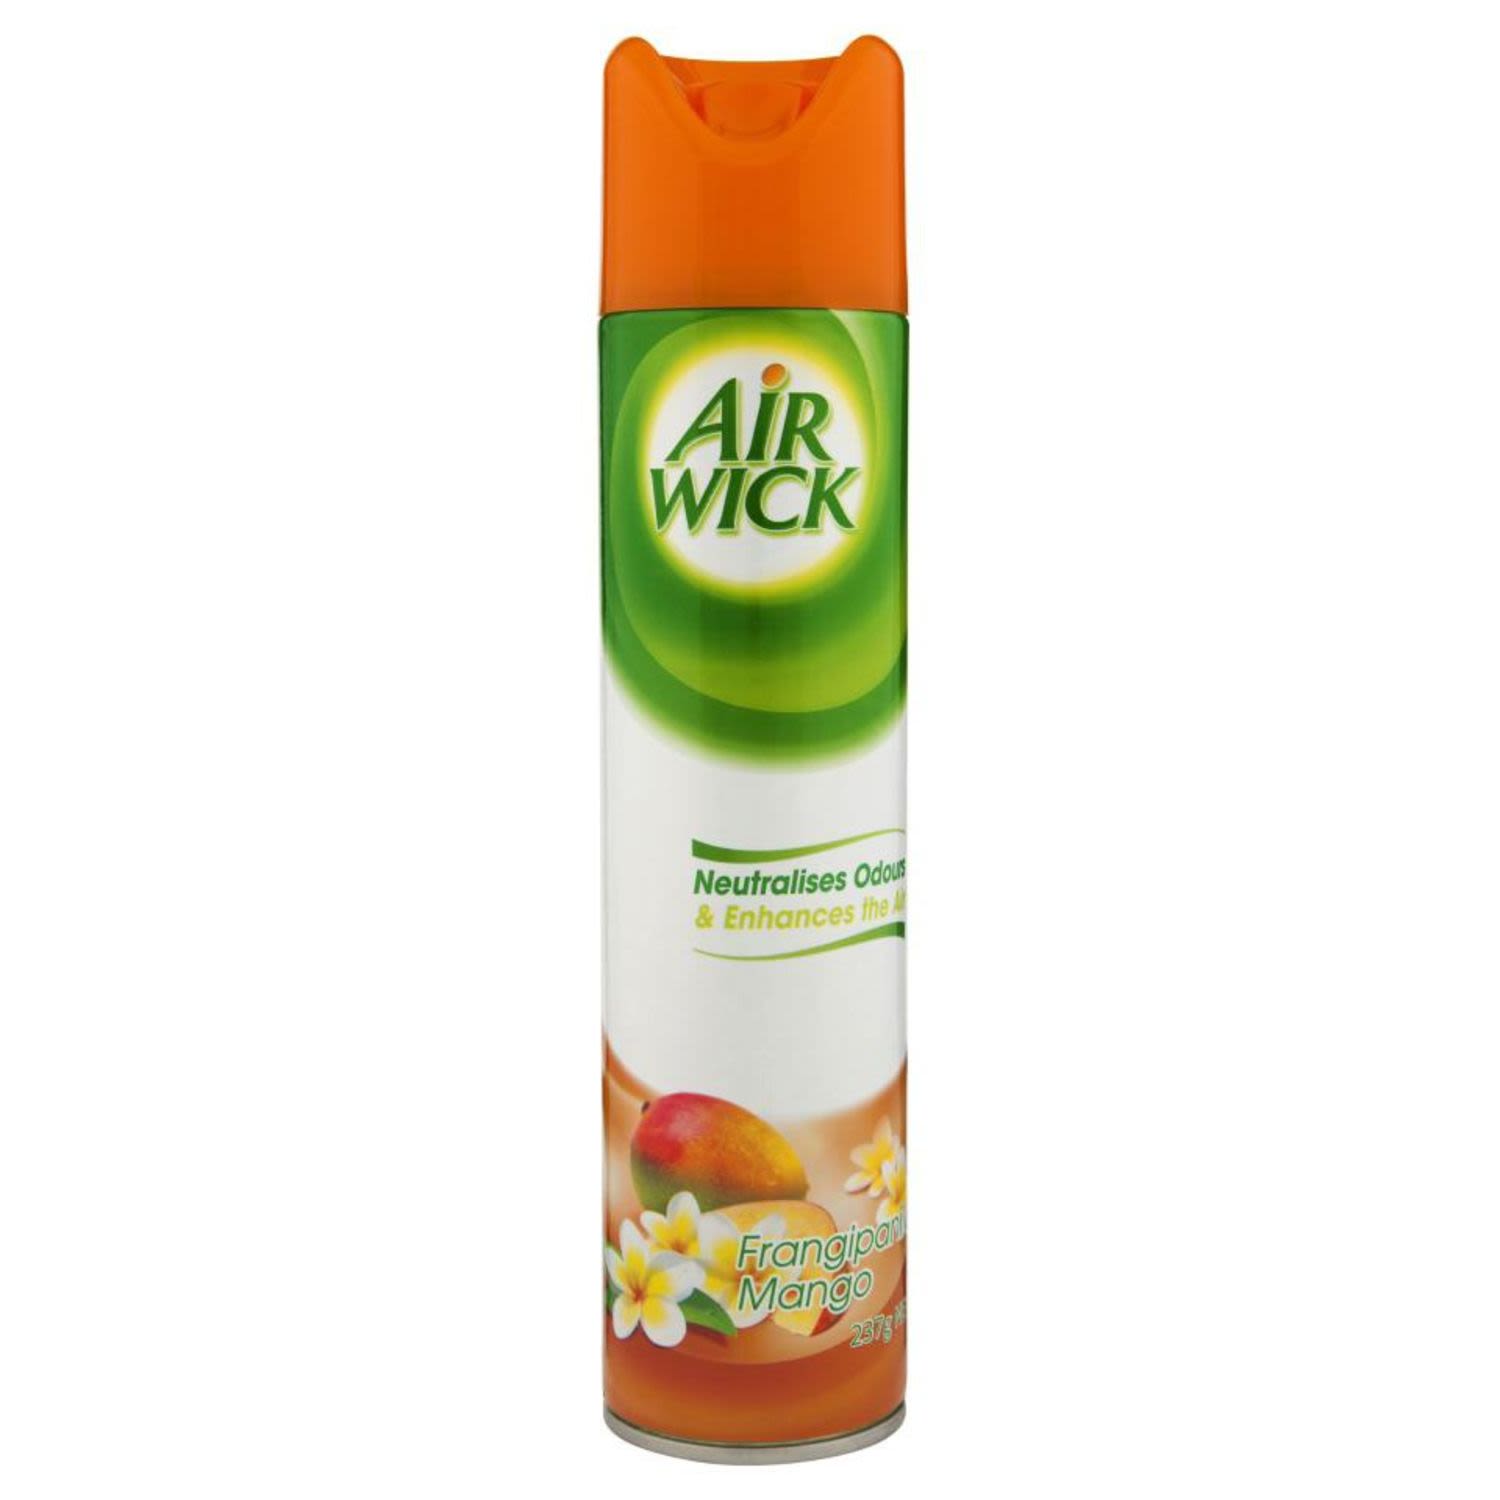 Air Wick Aero Frangipani & Mango, 237 Gram